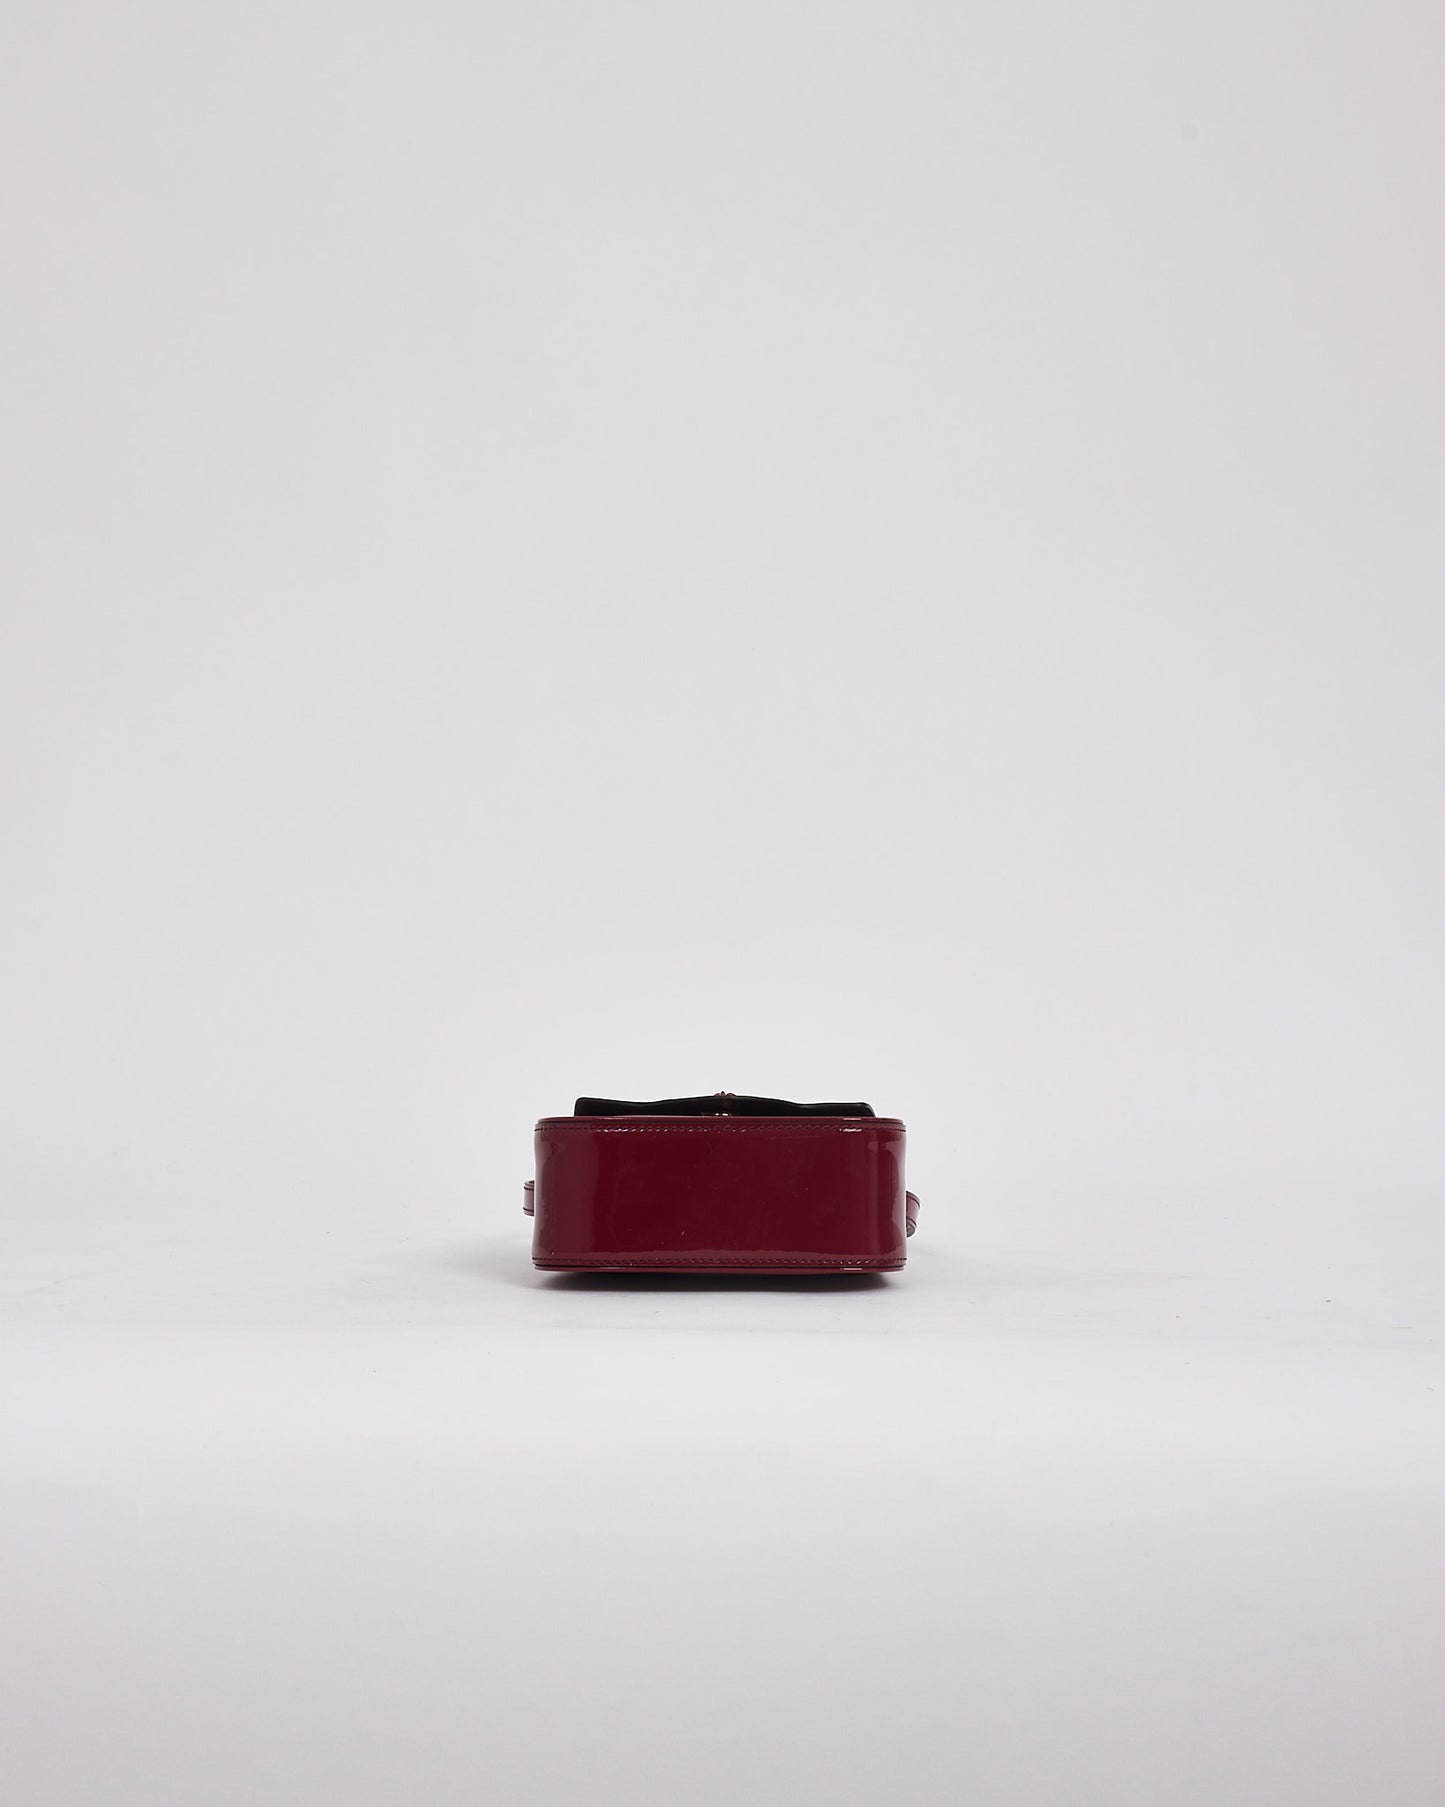 Versace Burgundy Patent Leather Mini 'La Medusa ' Bag